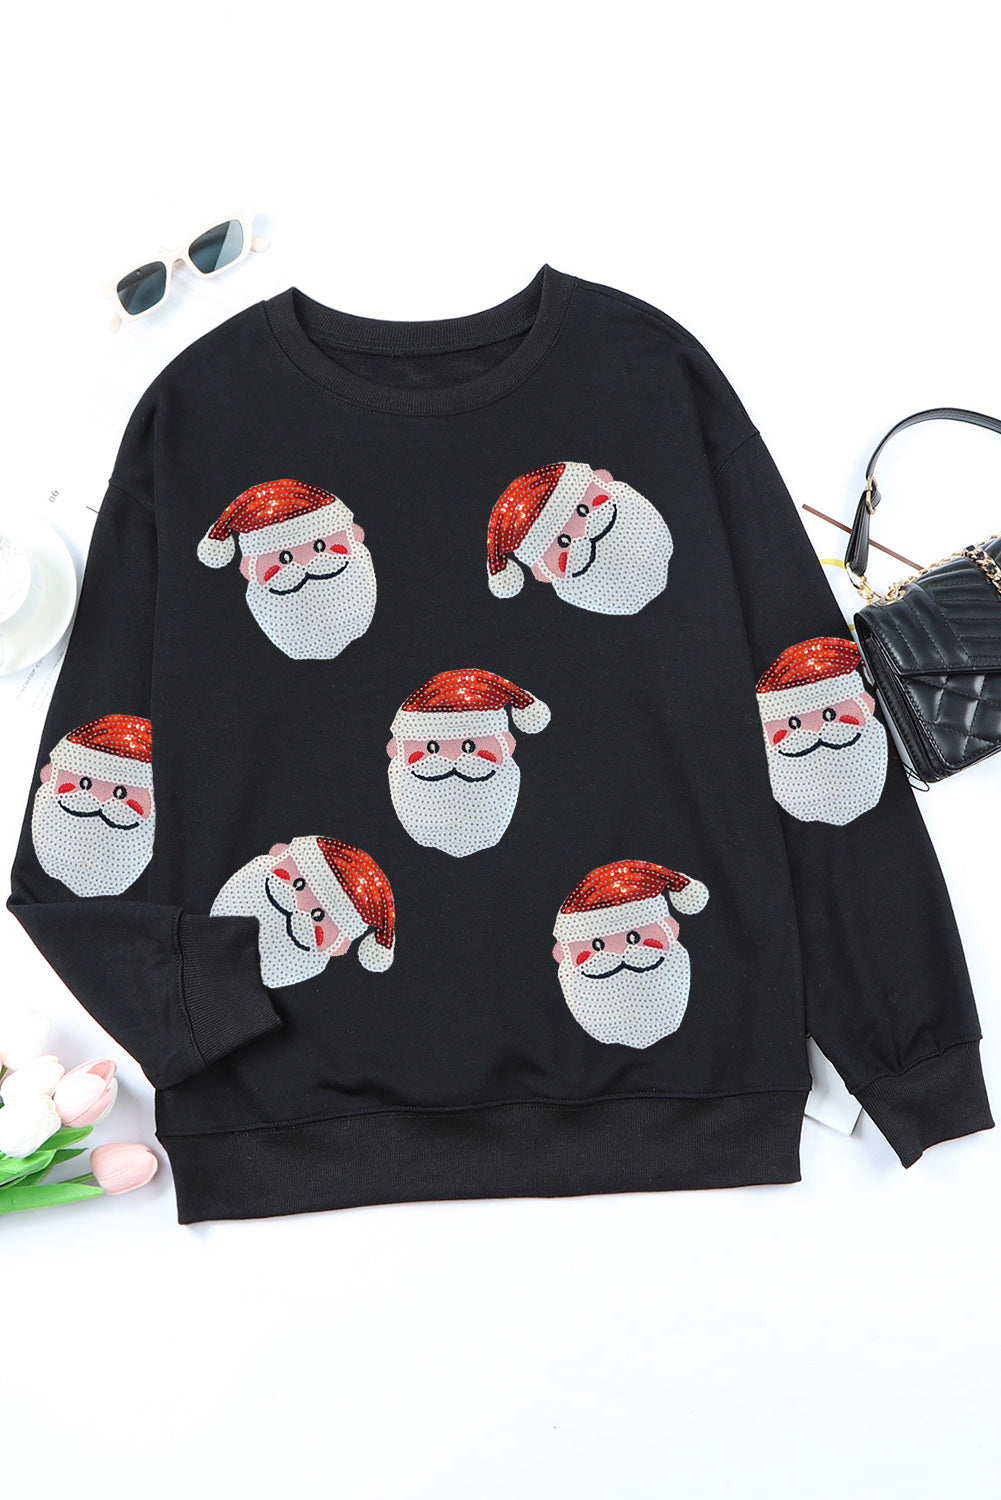 Santa Claus Sequin Graphic Women's Christmas Sweatshirt - 2 colors - women's sweatshirts at TFC&H Co.